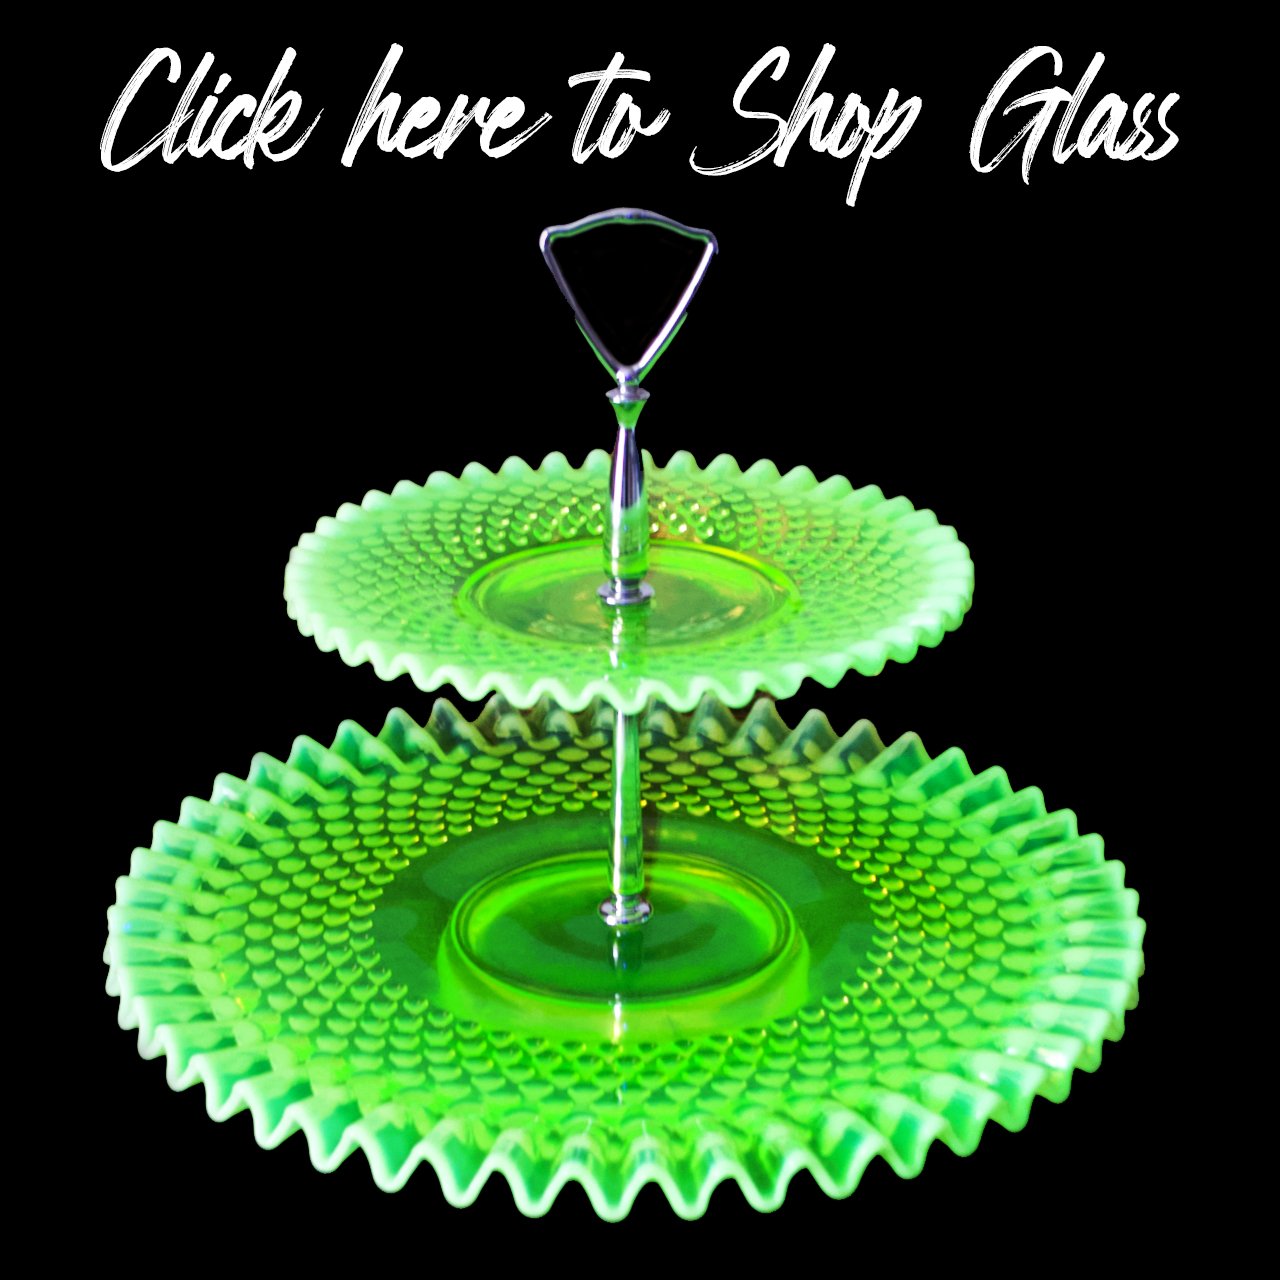 Shop Glass.jpg